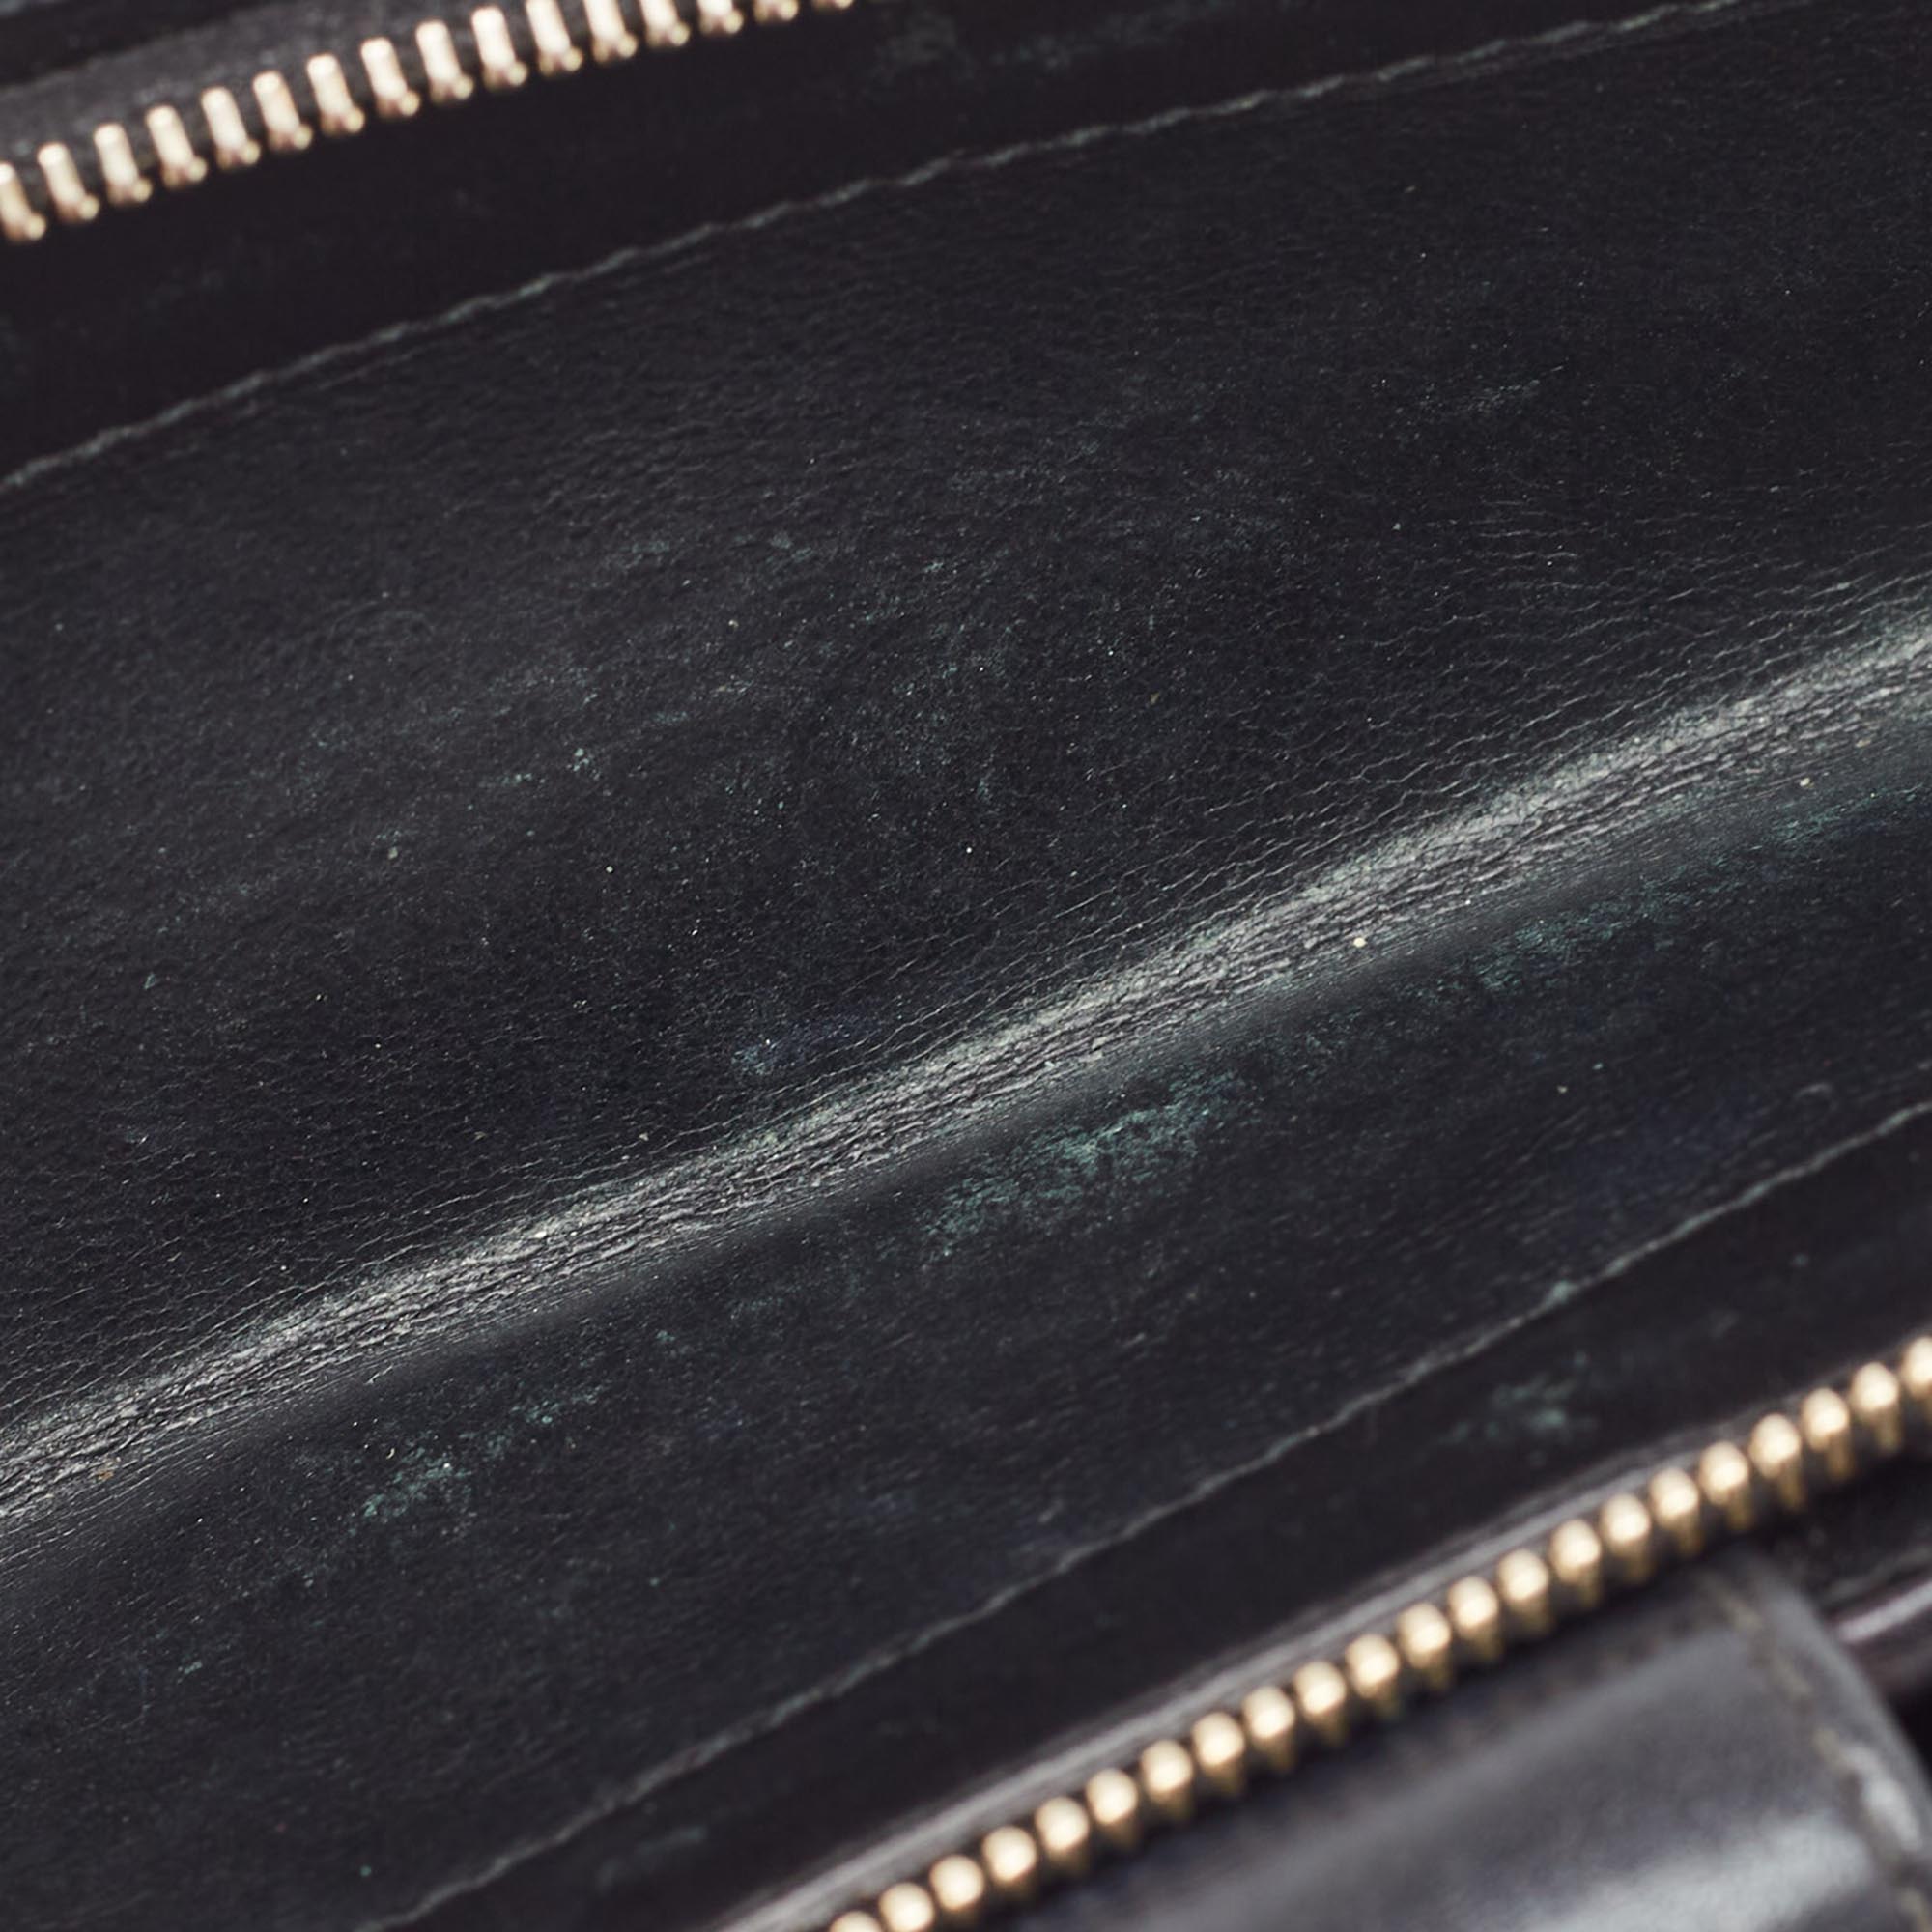 Gucci Black Guccissima Leather Abbey Continental Wallet